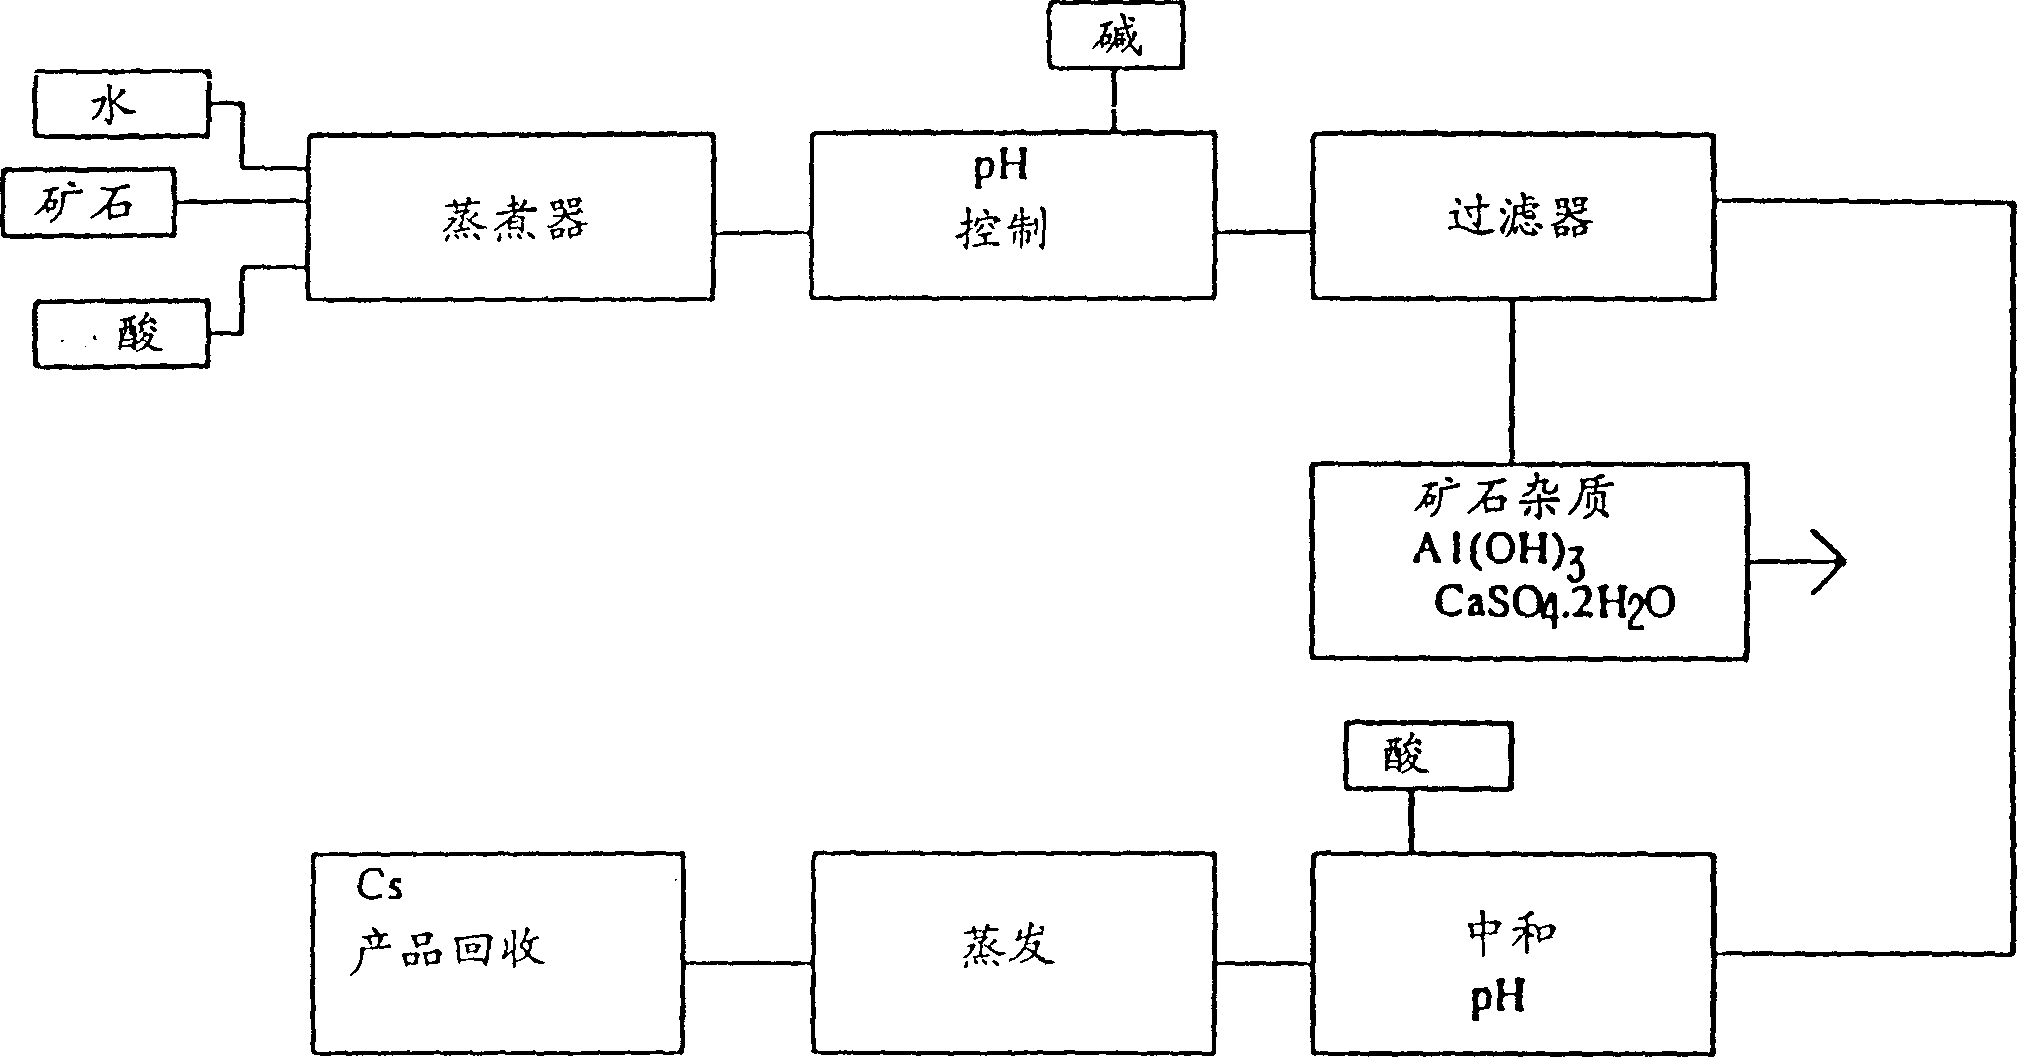 Method for production of cesium salt